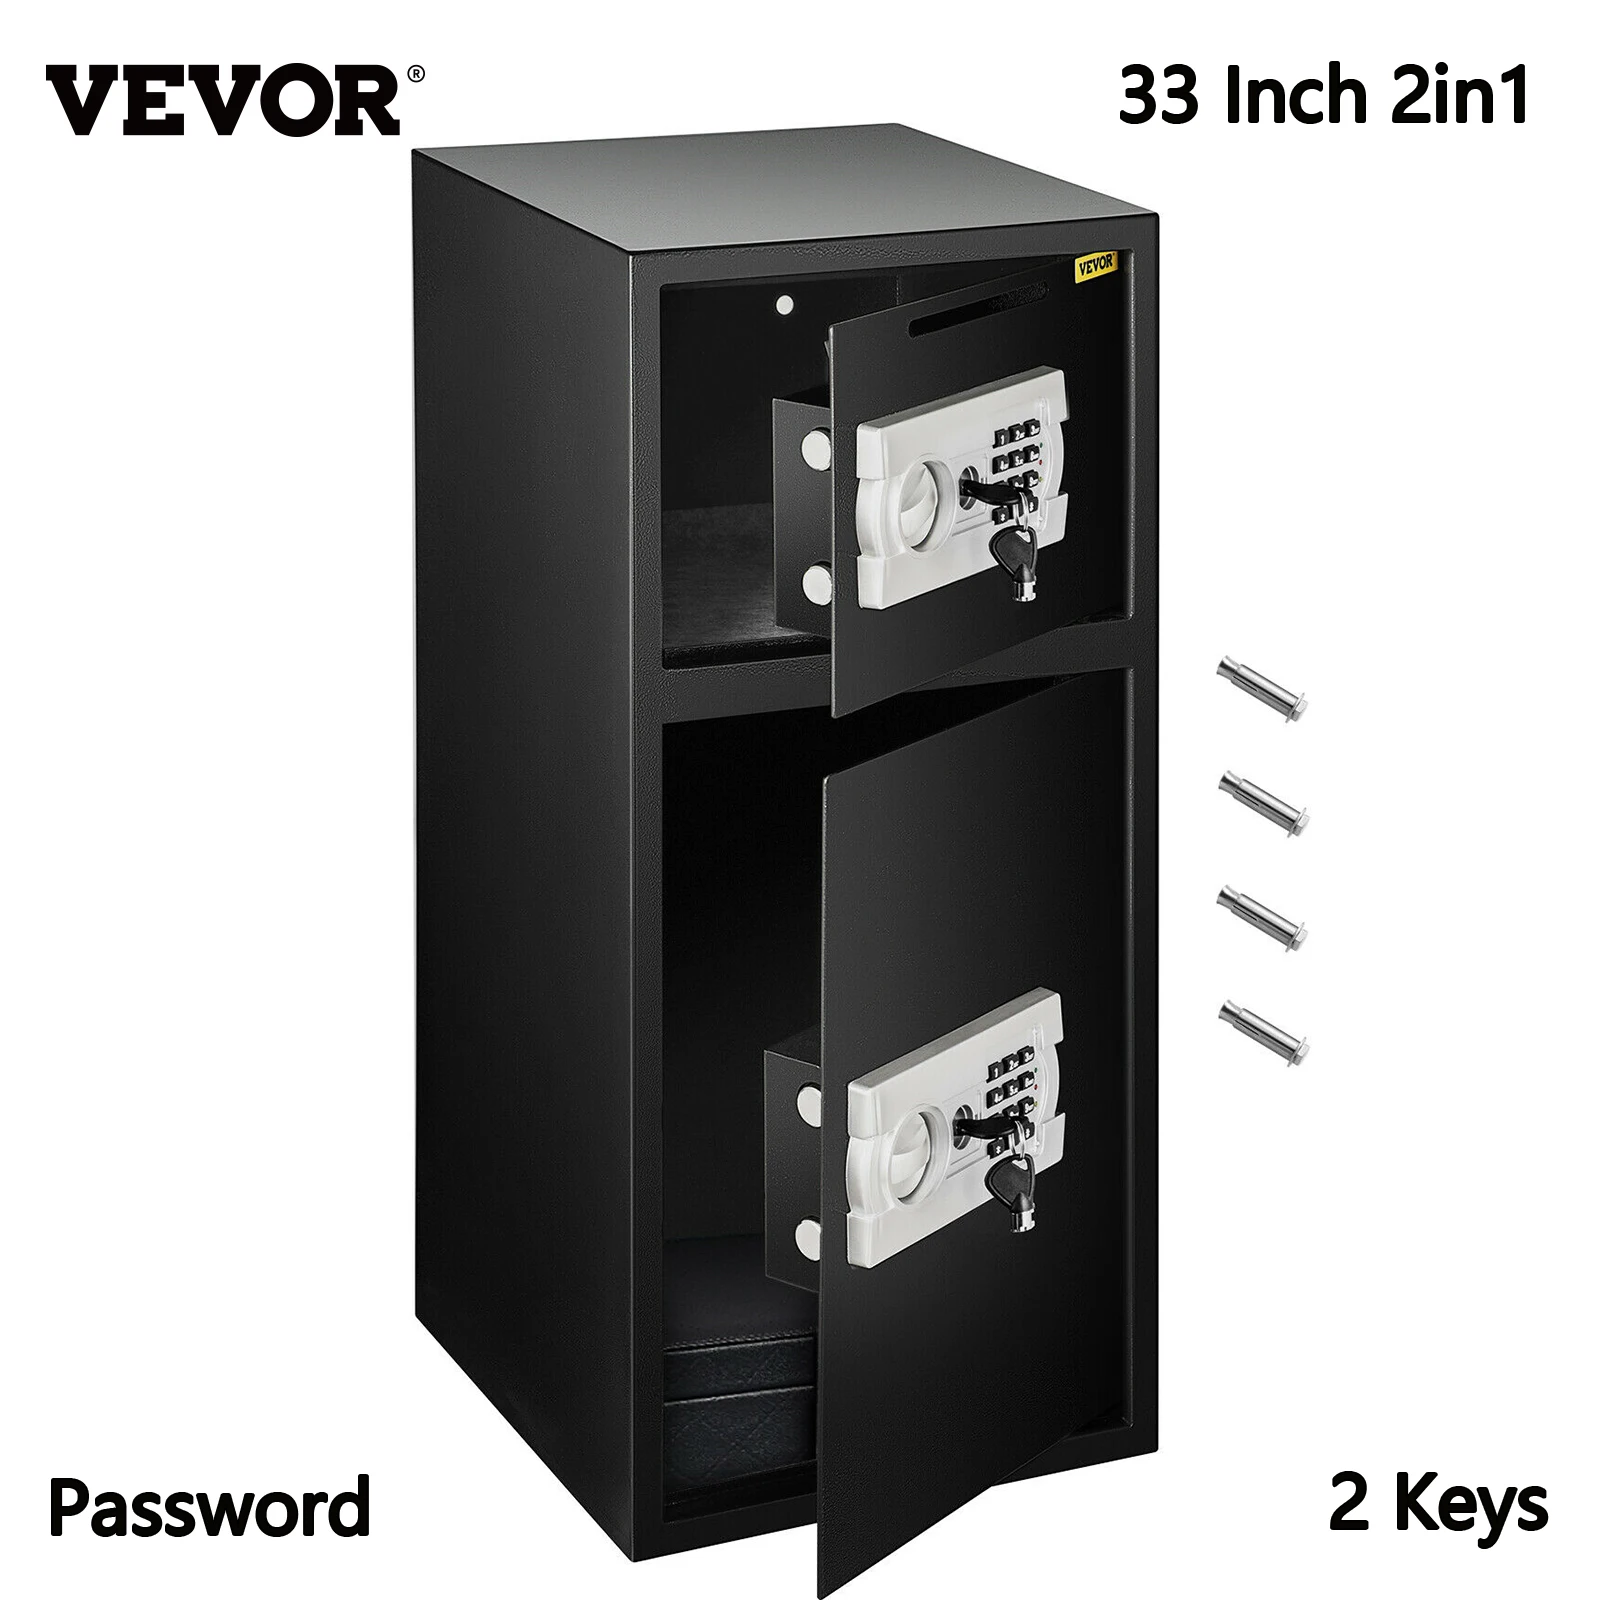 

VEVOR 33" 2in1 Electronic Safe Money Box Double Door Secret Hidden Safe Deposit Code Lock W/ 2 Keys Piggy Bank for Homes Offices